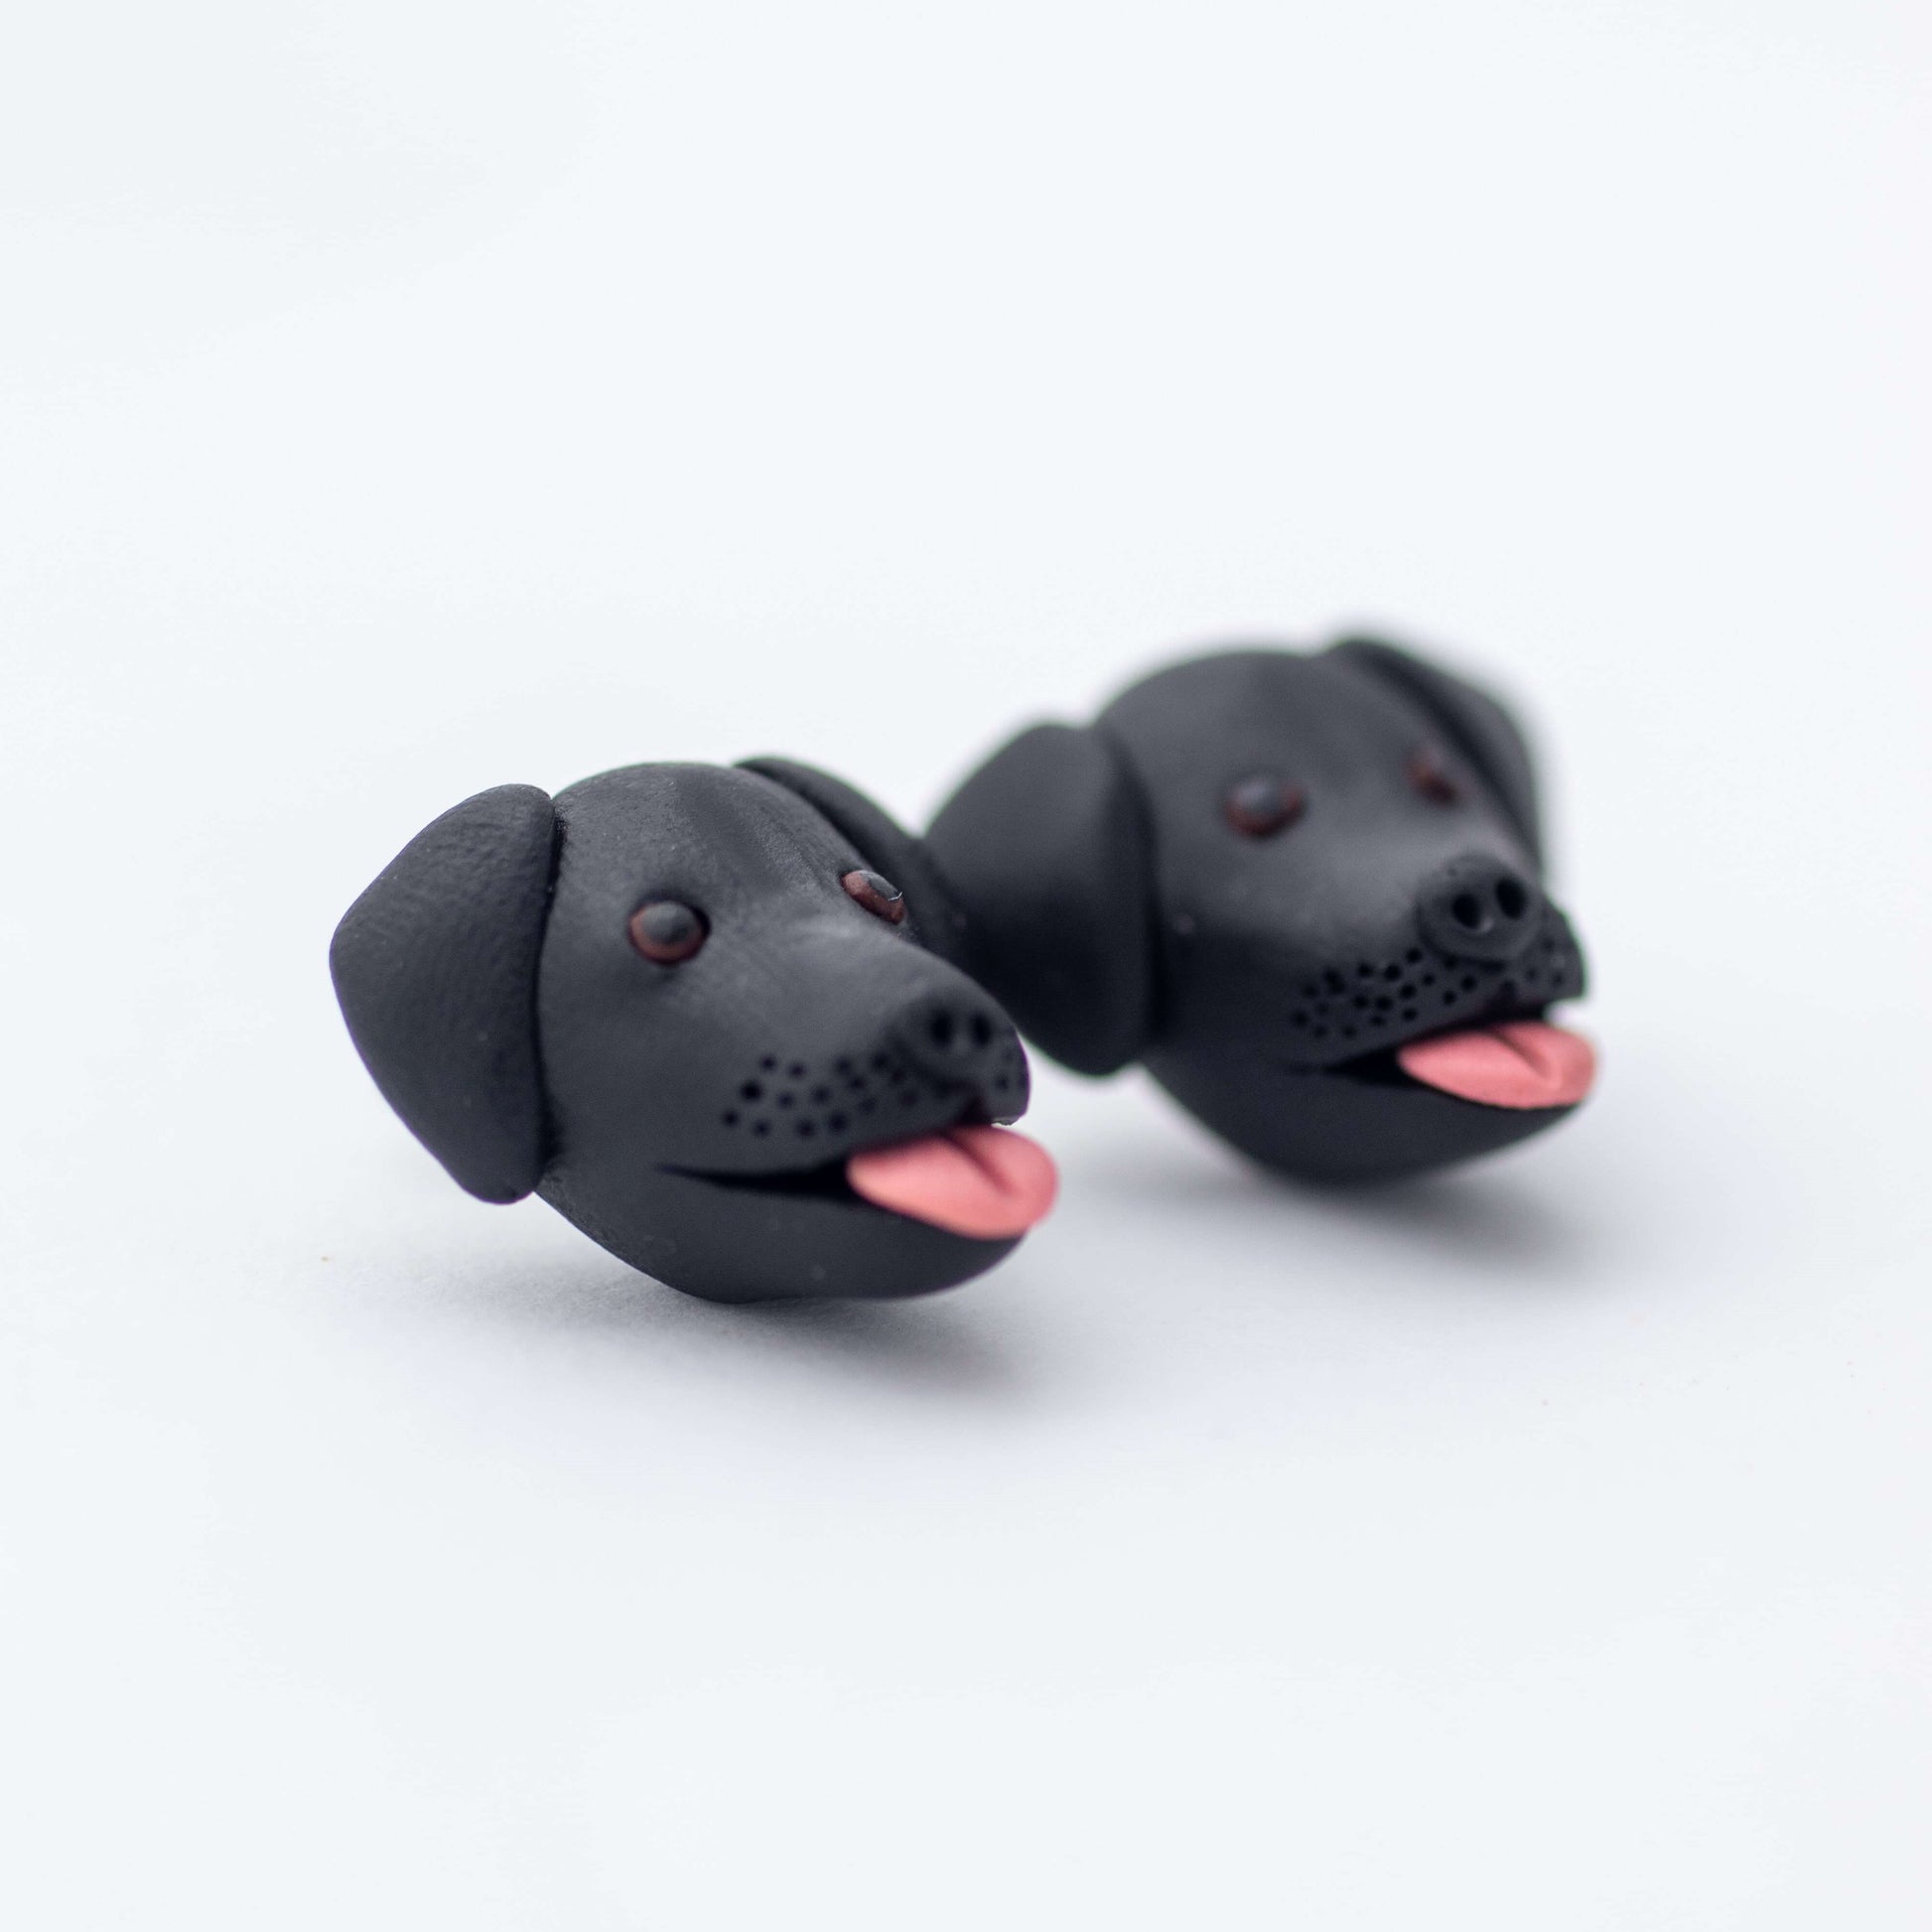 Handmade polymer clay black lab stud earrings up close